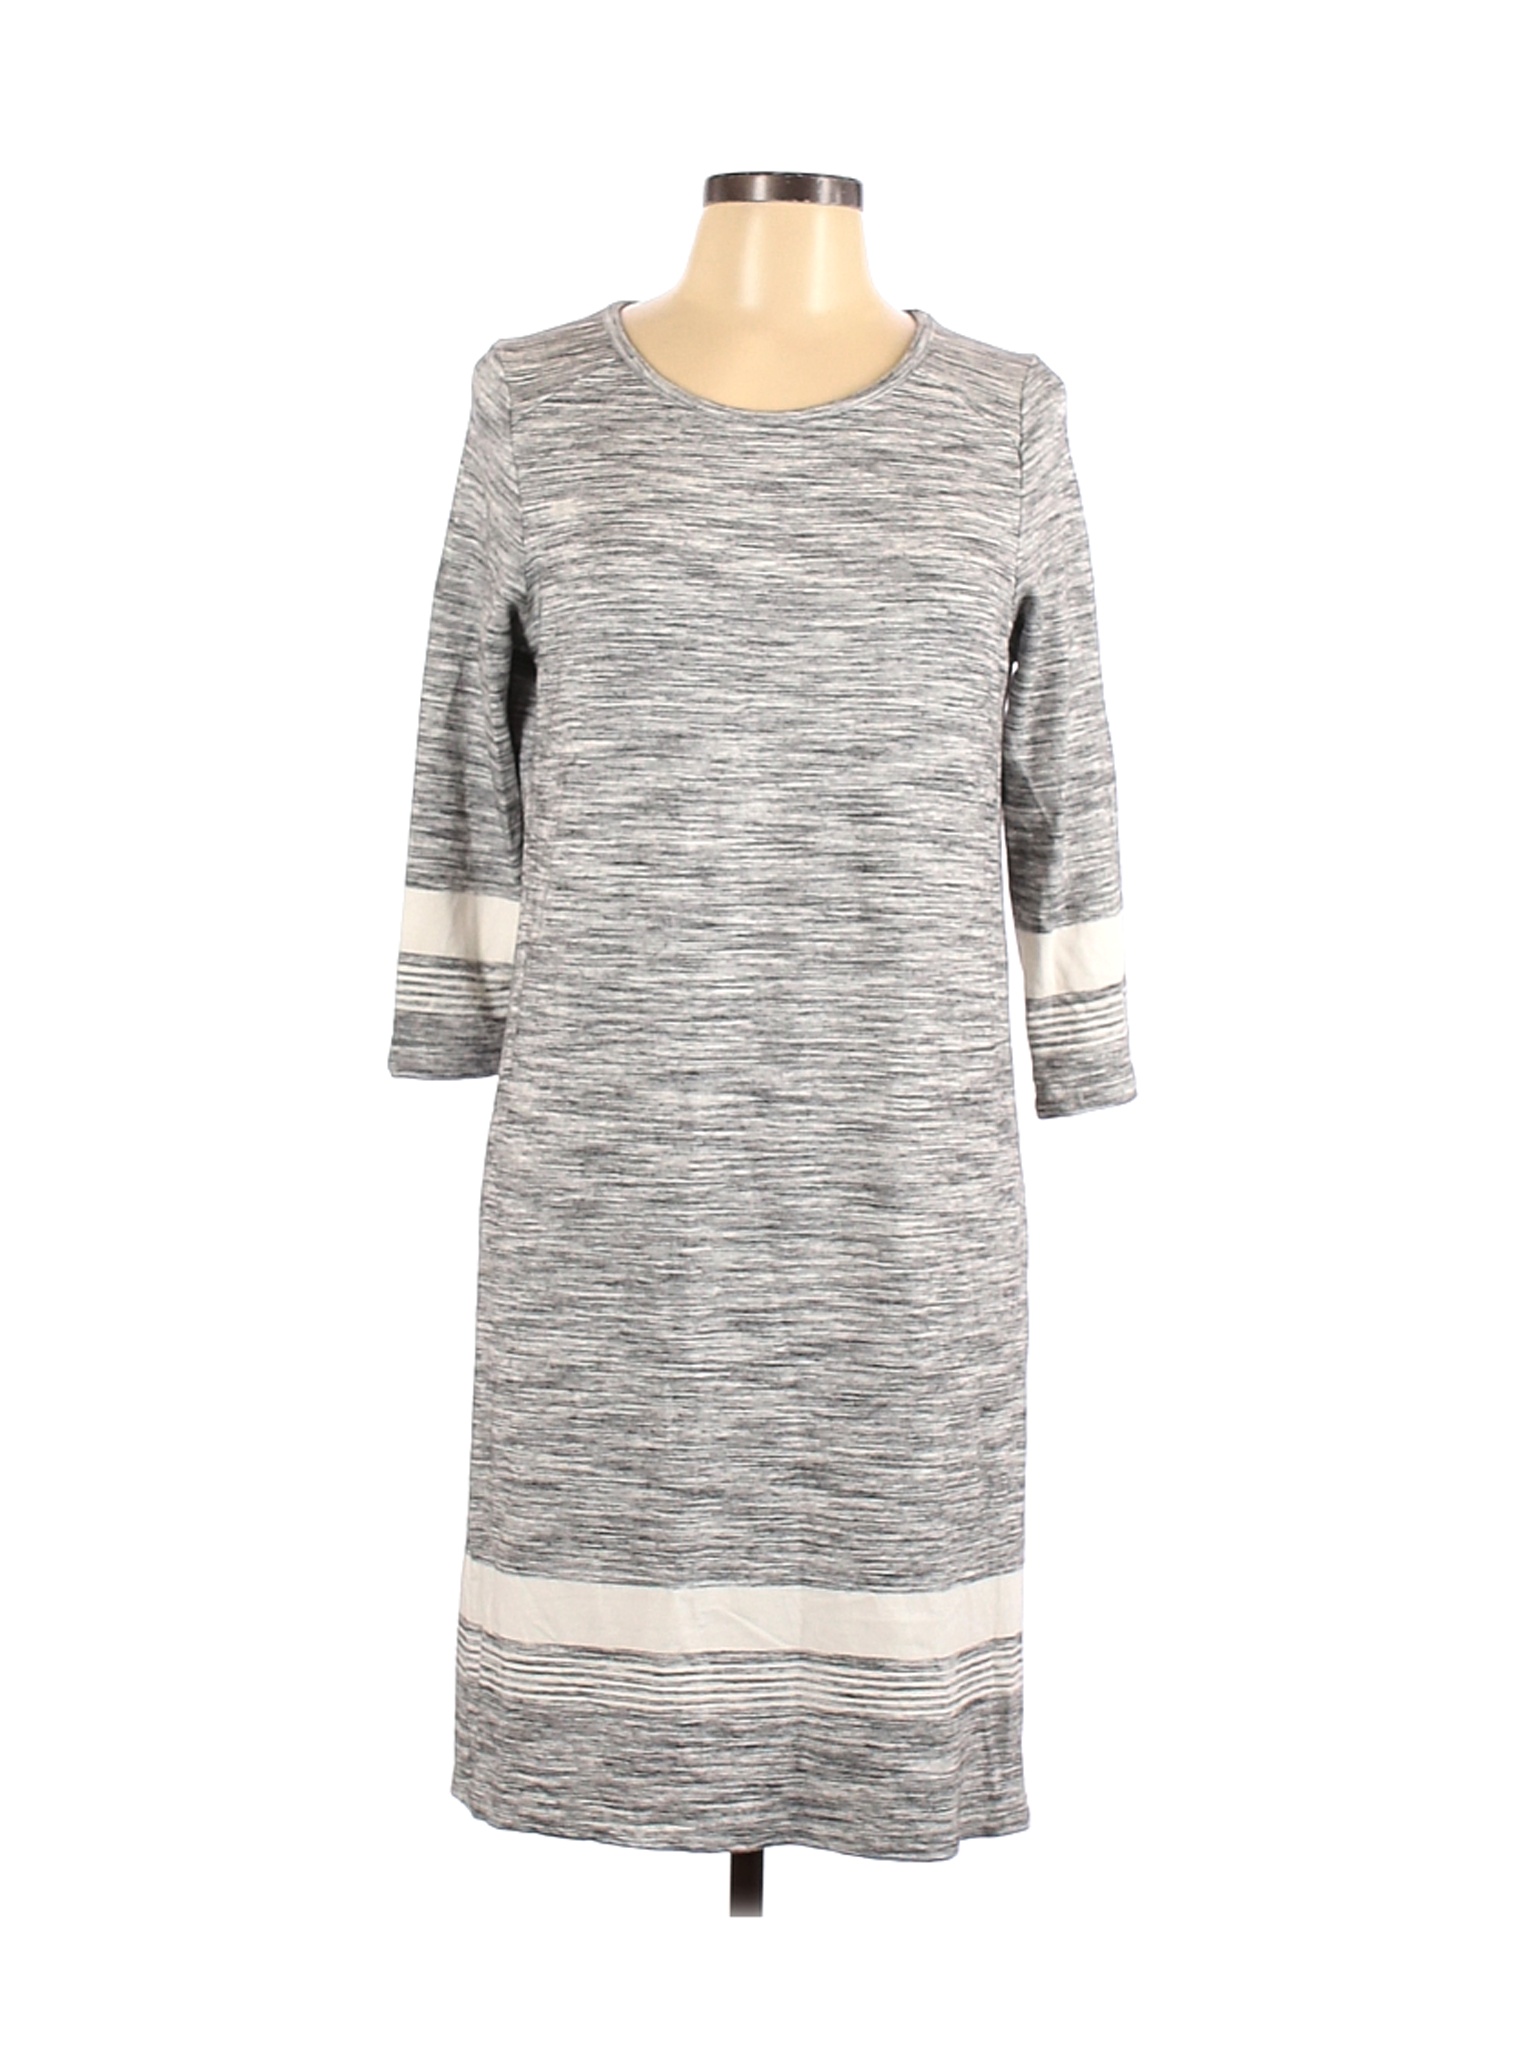 Hilary Radley Women Gray Casual Dress L | eBay